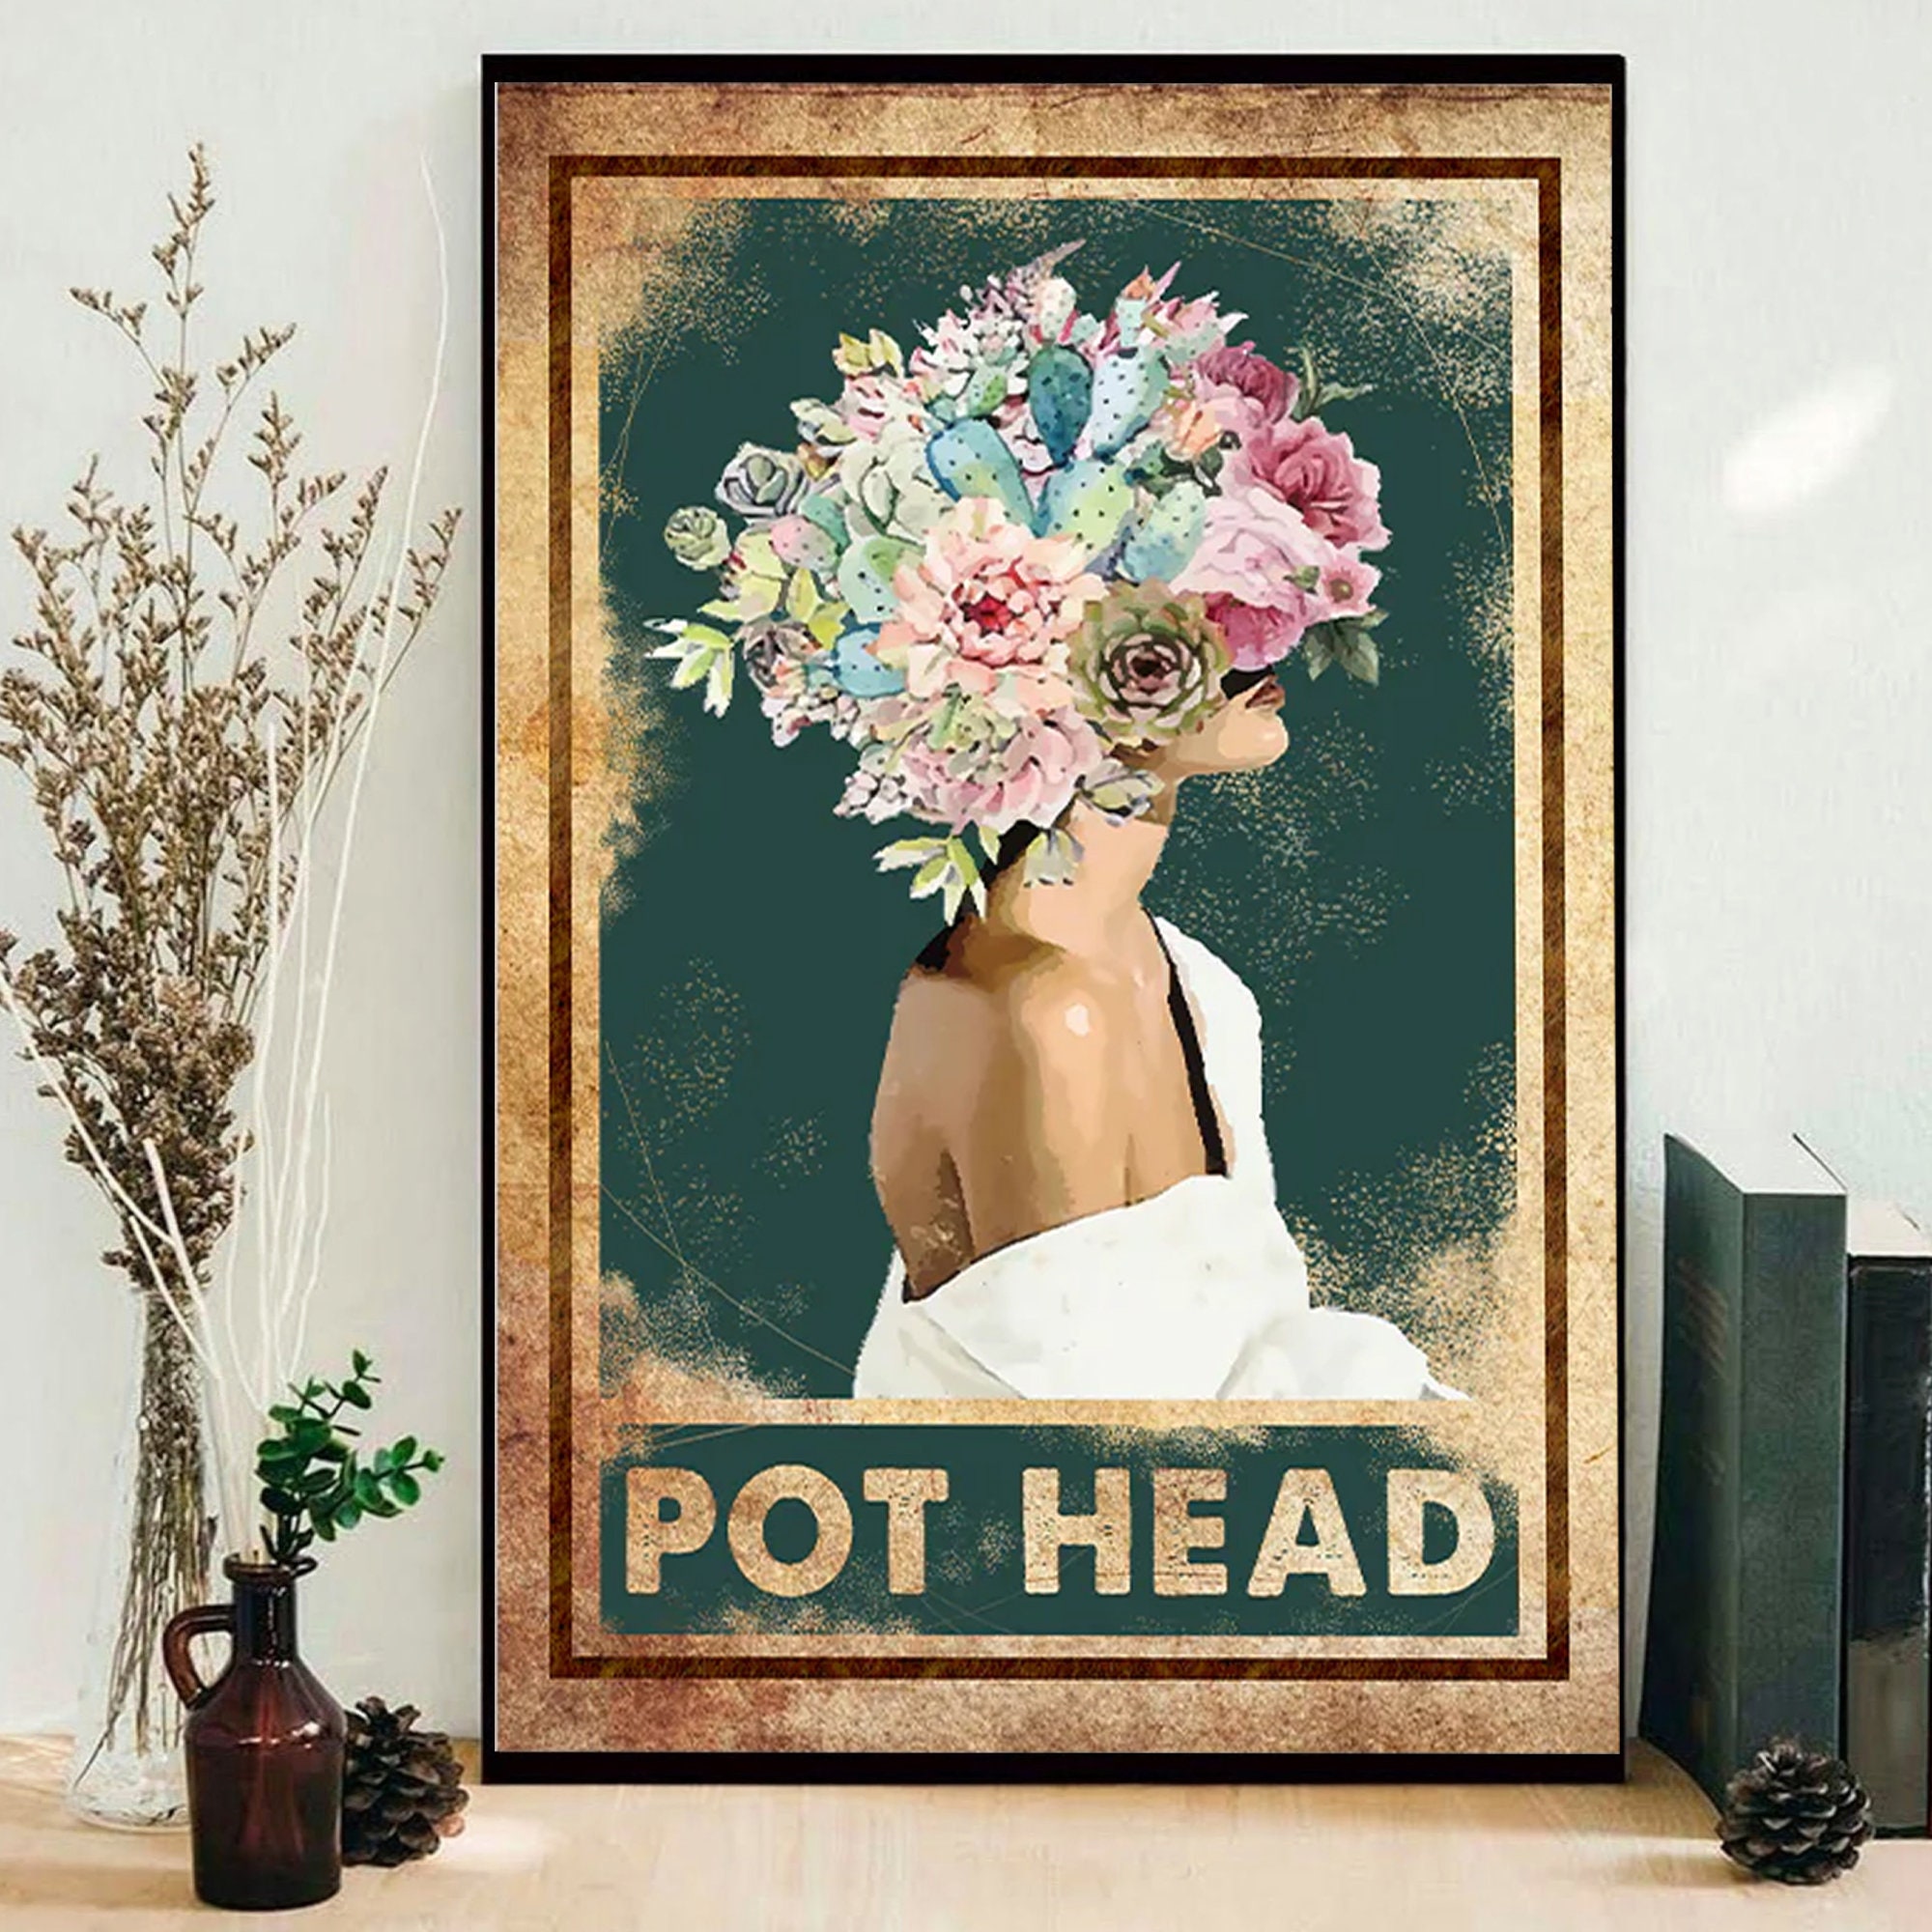 Pothead poster